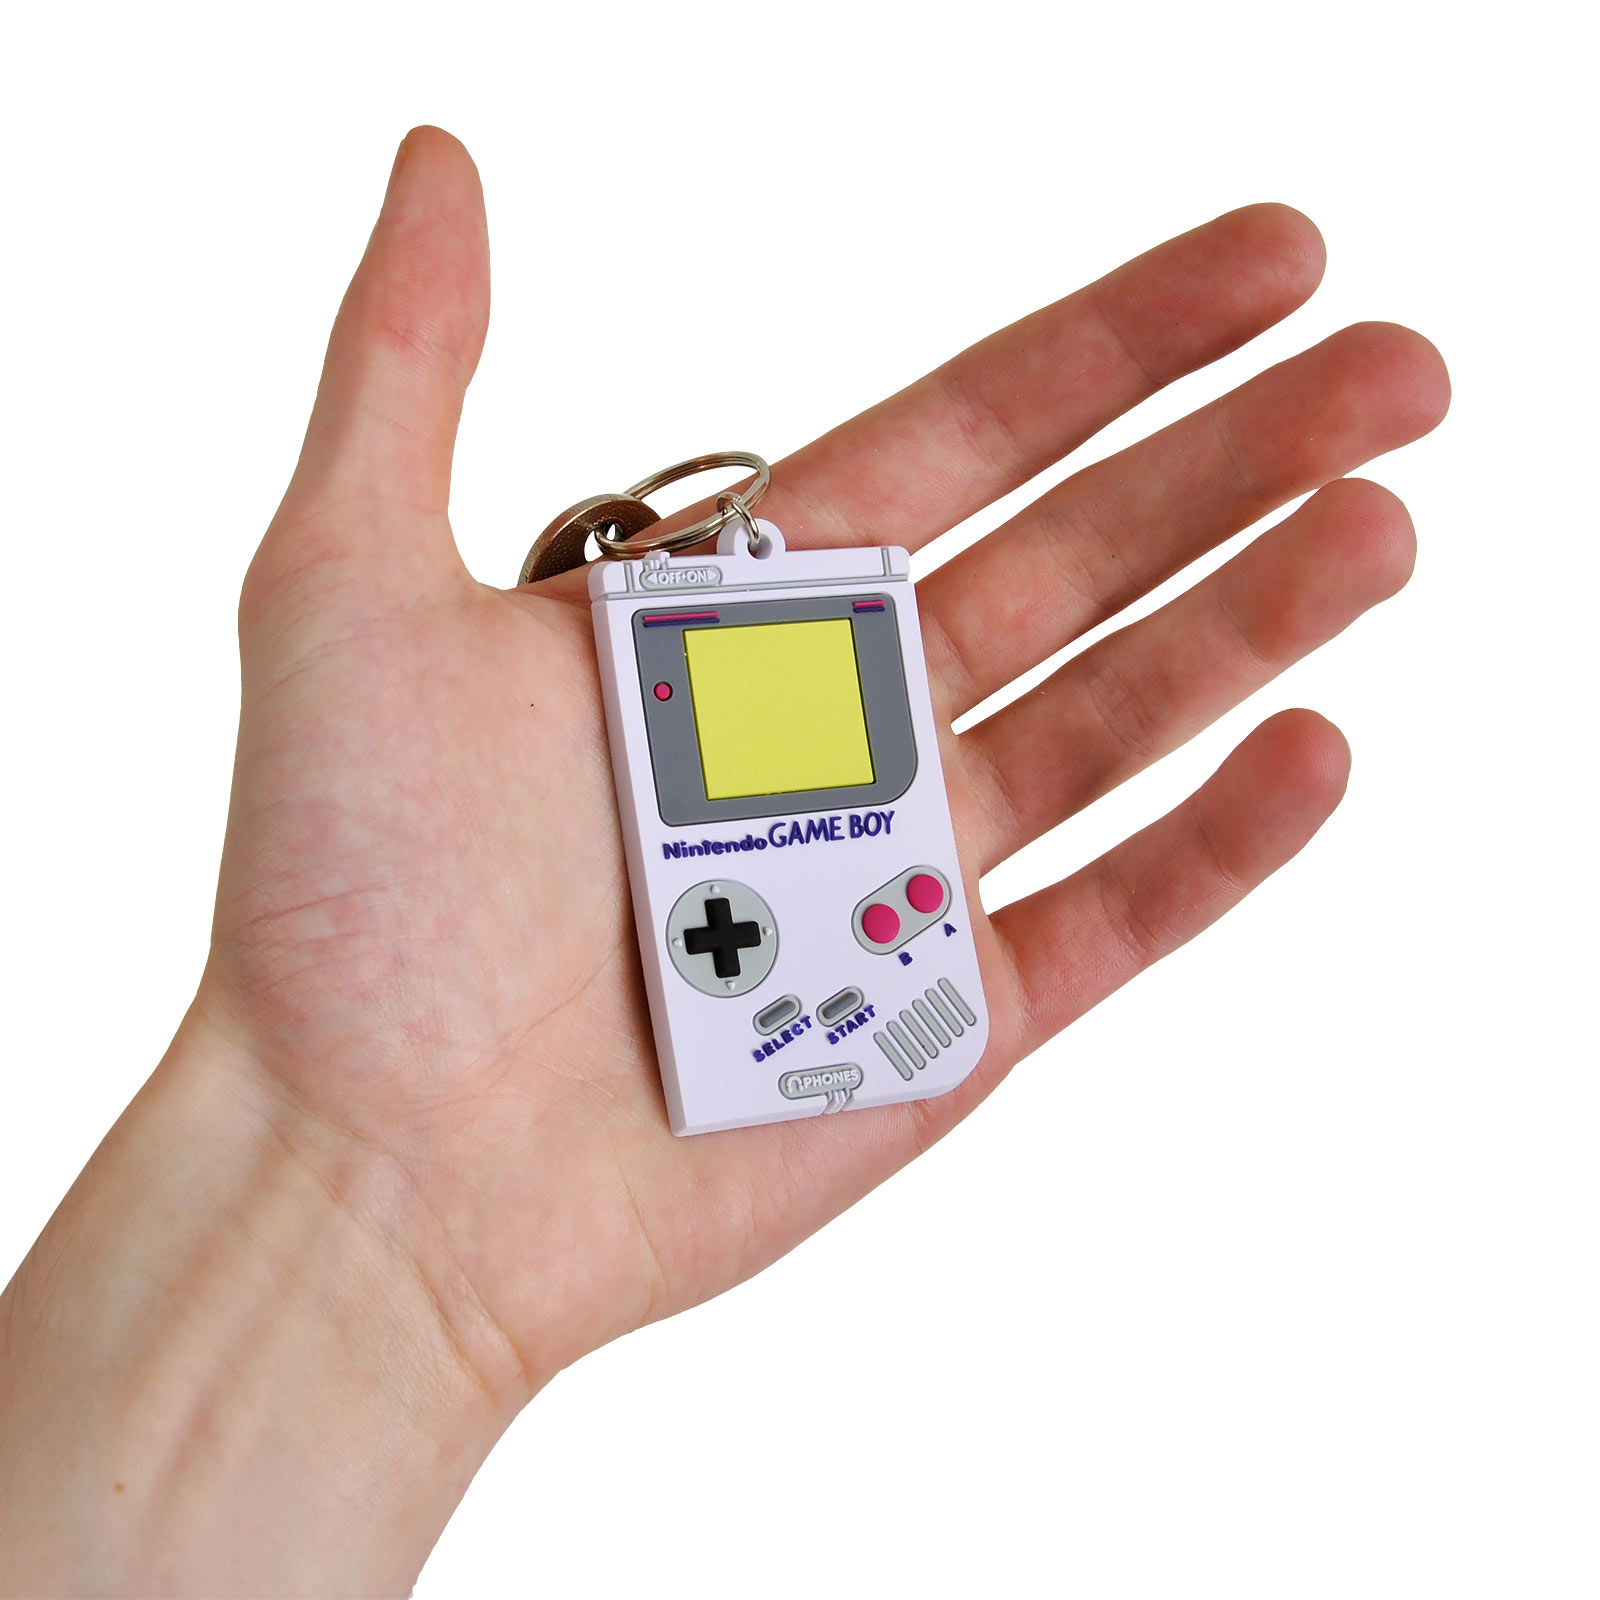 Nintendo - Game Boy Keychain